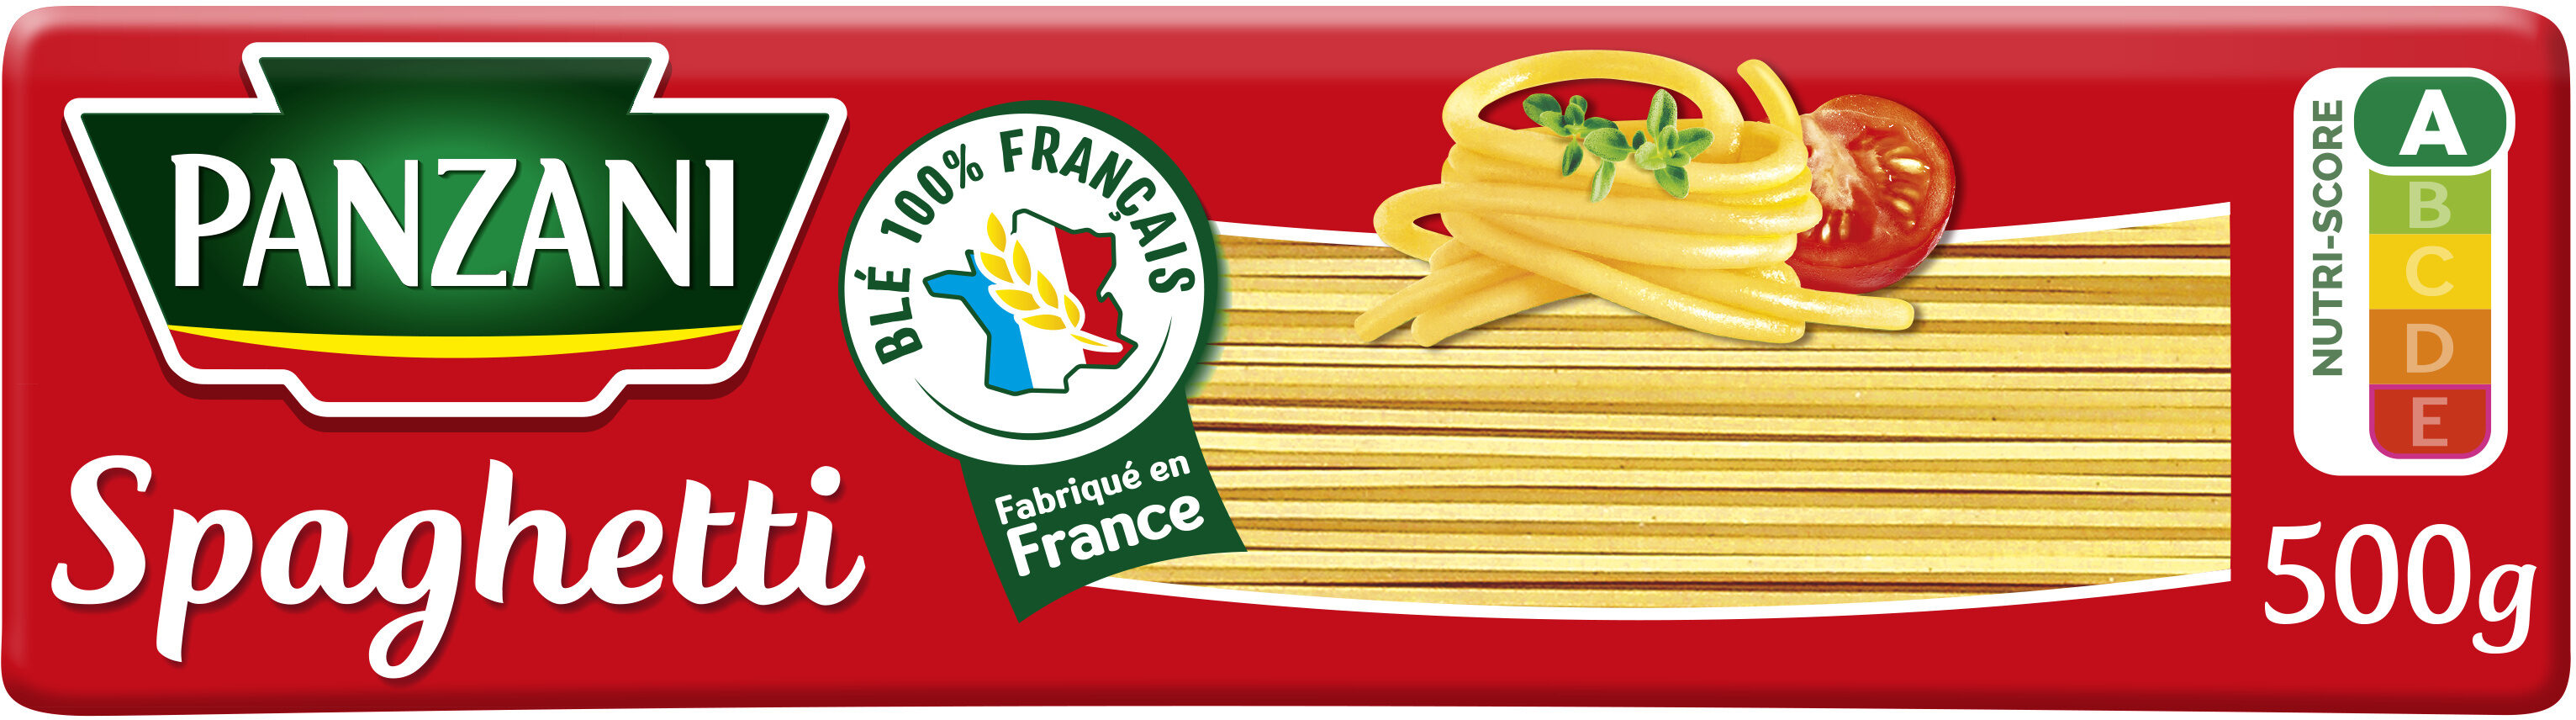 Panzani spaghetti 500g - Produit - fr